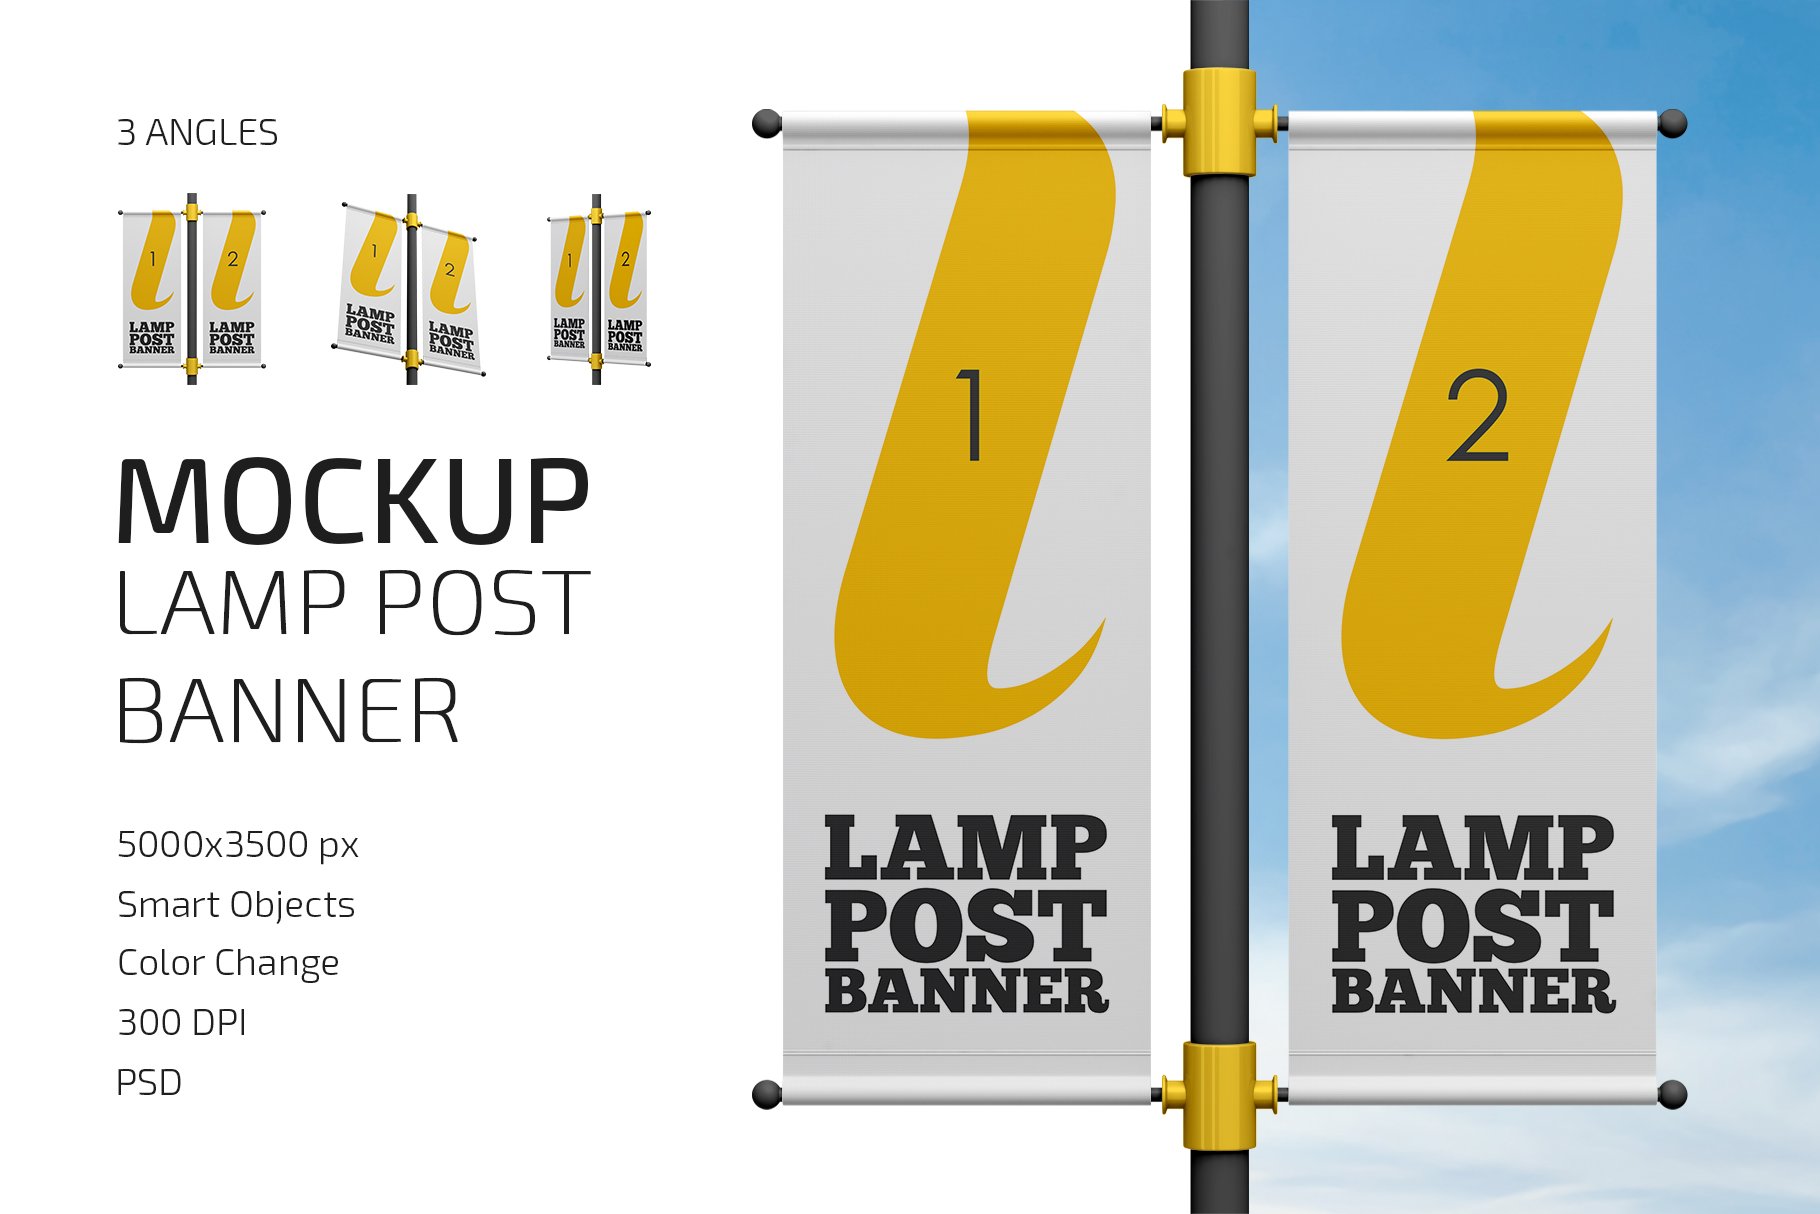 Lamp Post Banner Mockup Set cover image.